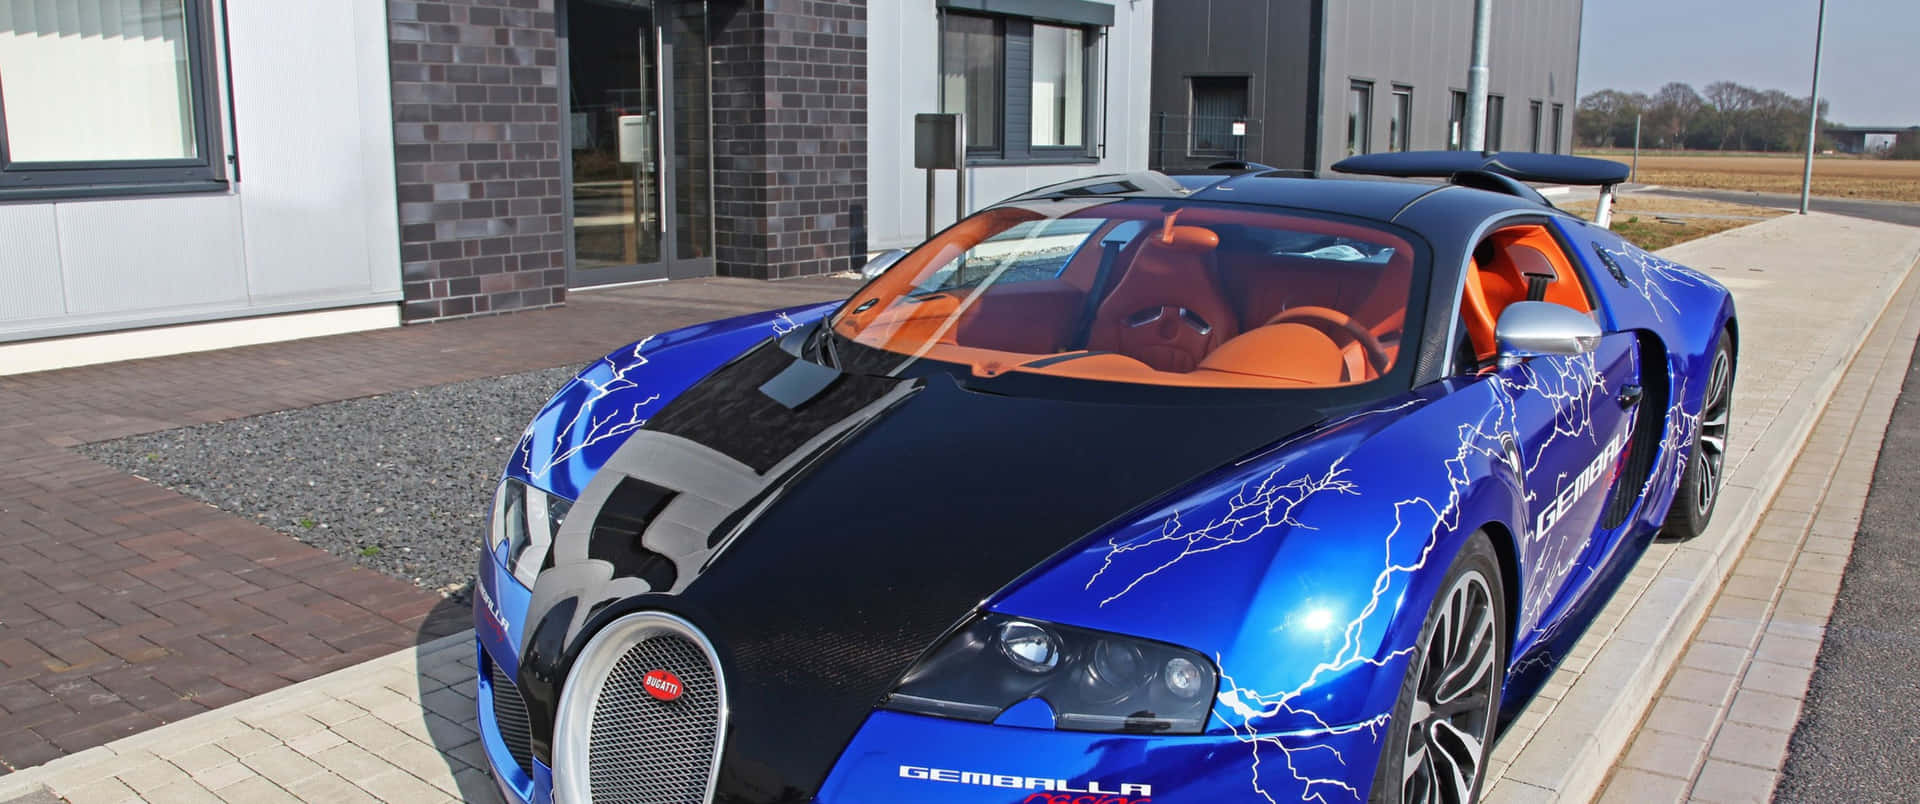 Bugatti Veyron S - A Blue And Black Sports Car